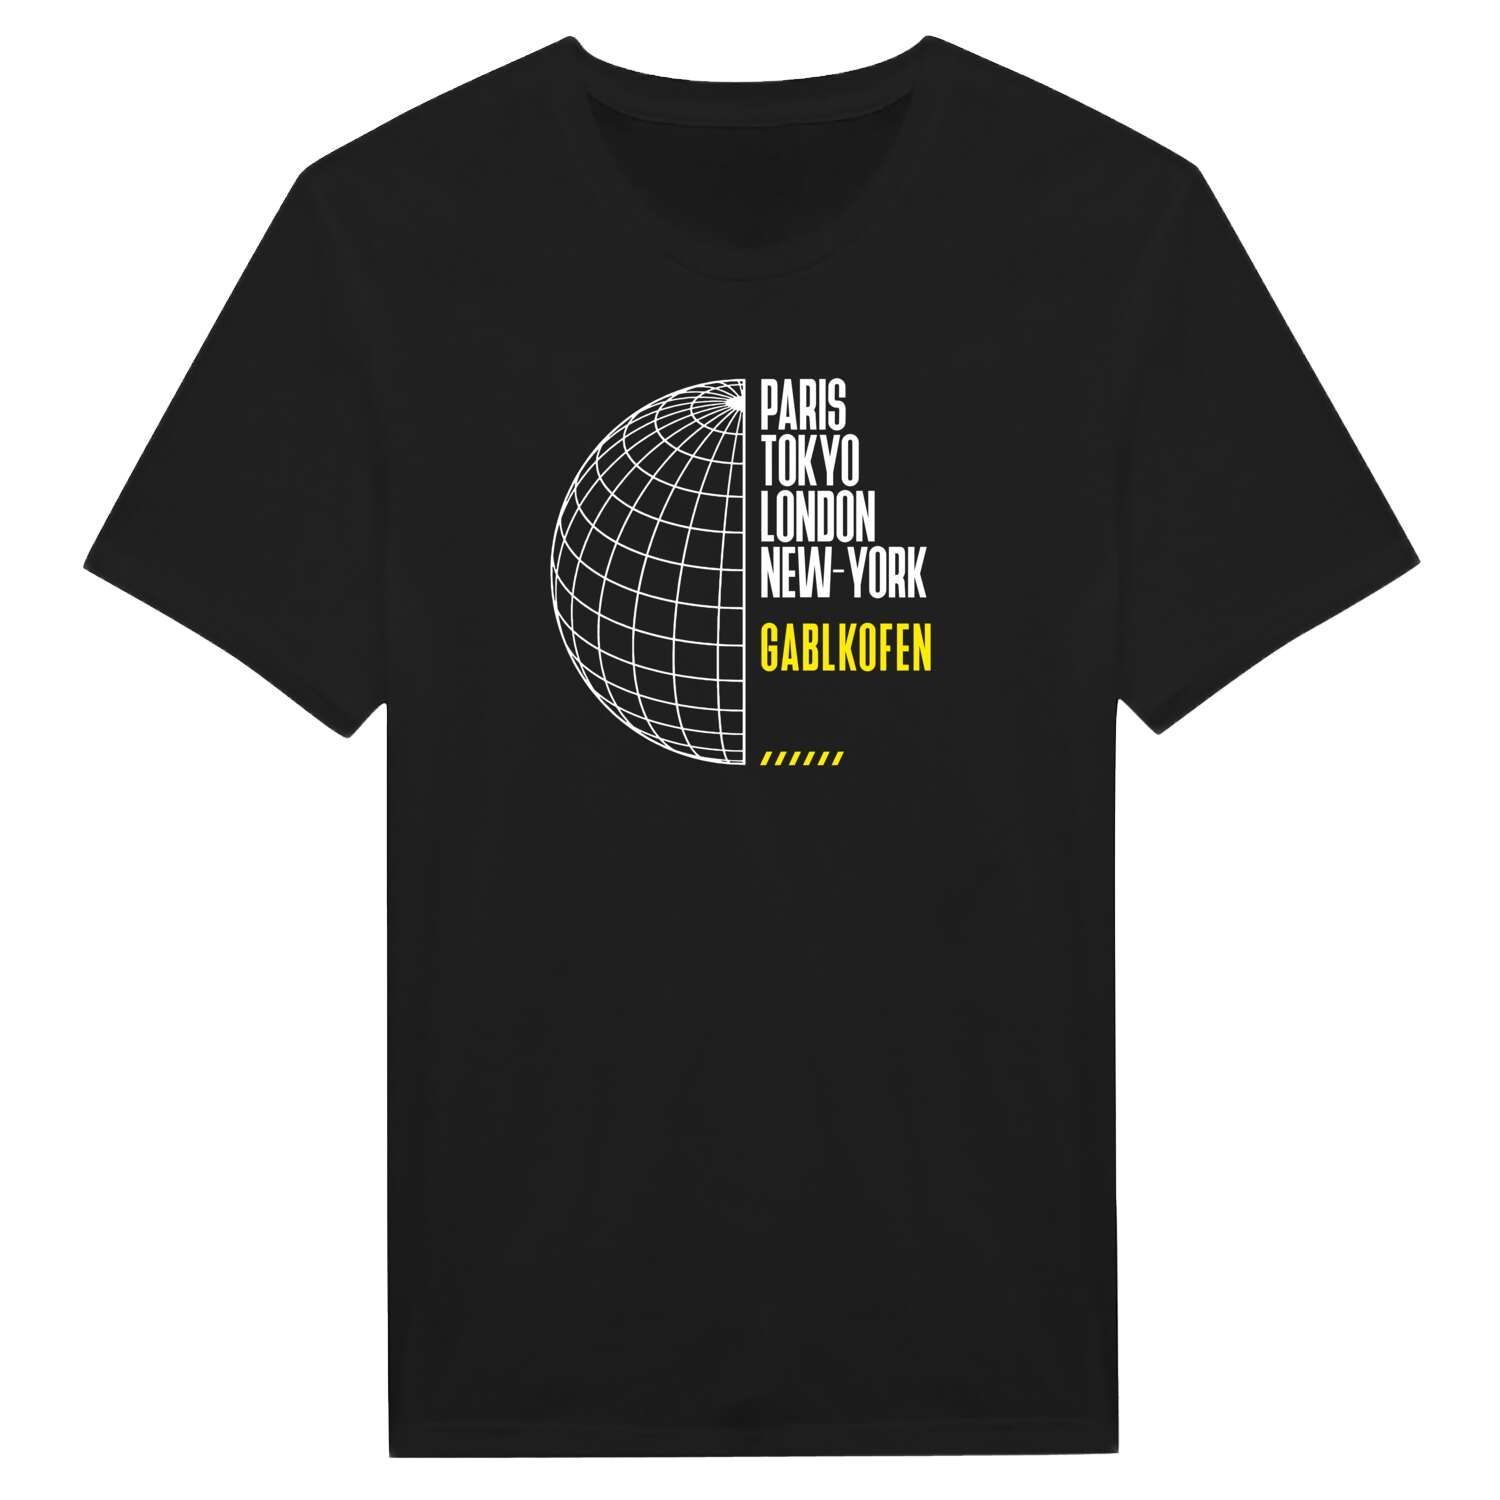 Gablkofen T-Shirt »Paris Tokyo London«